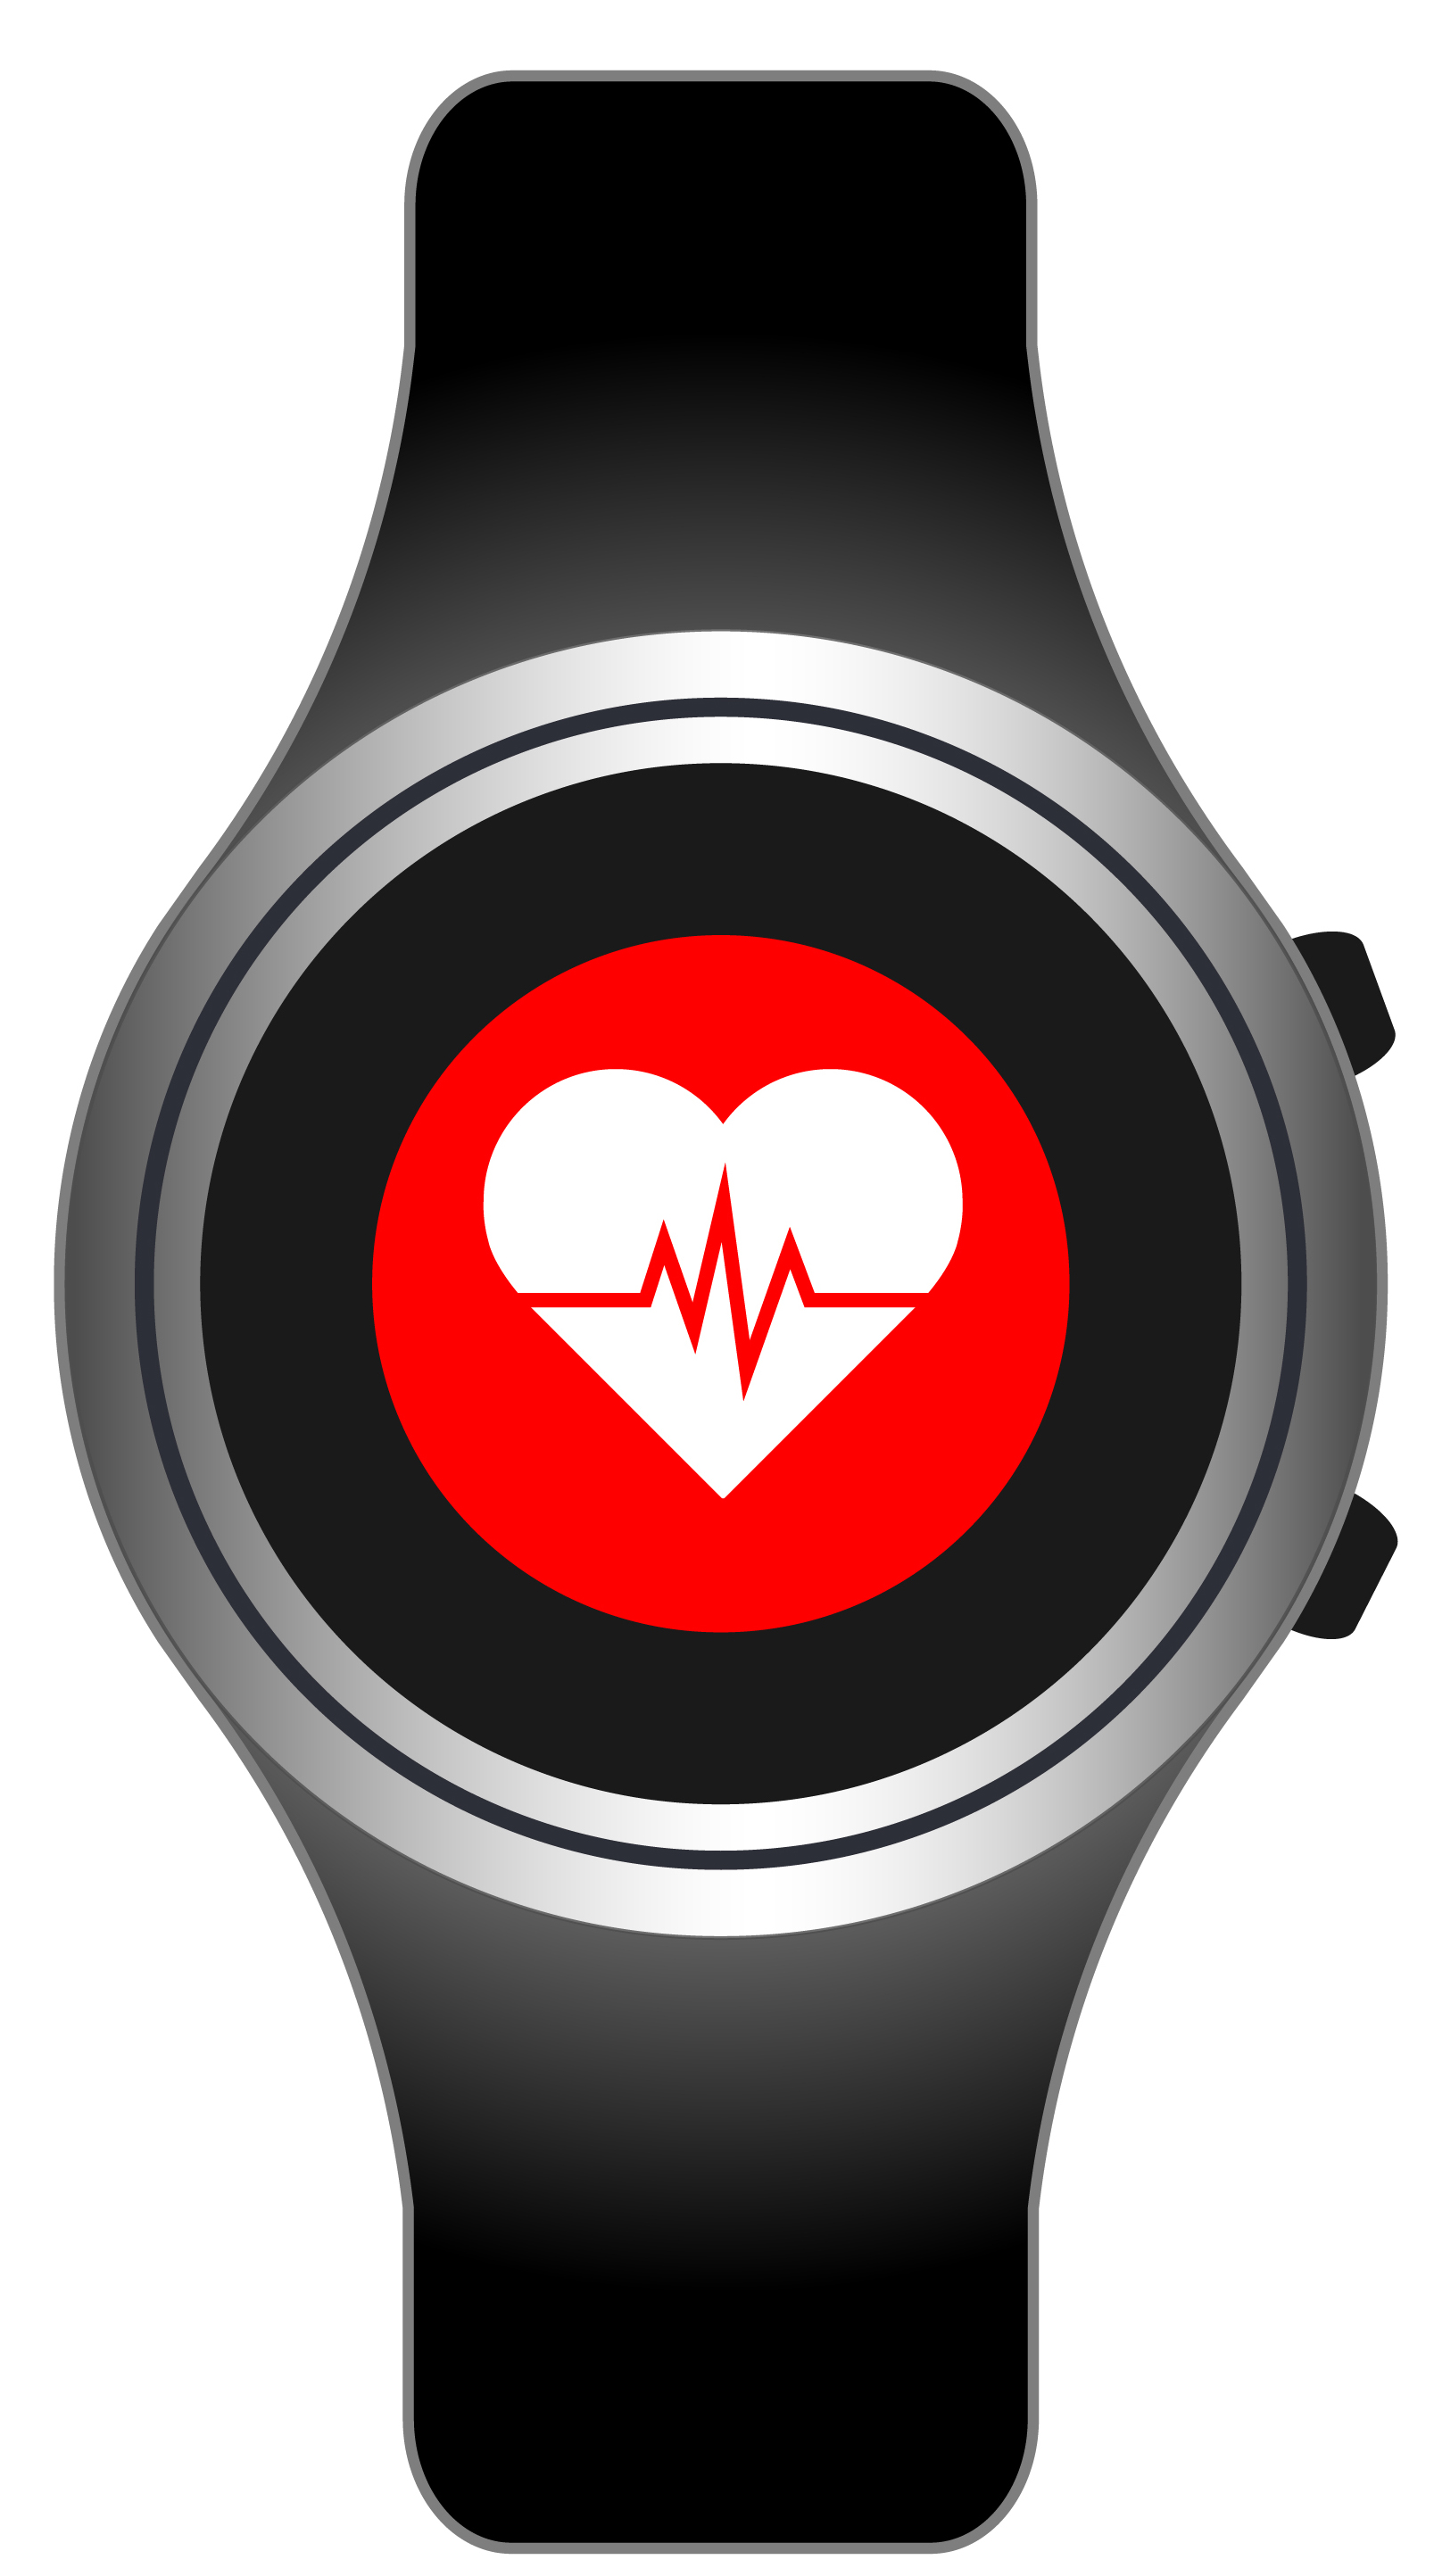 Watch monitoring health image